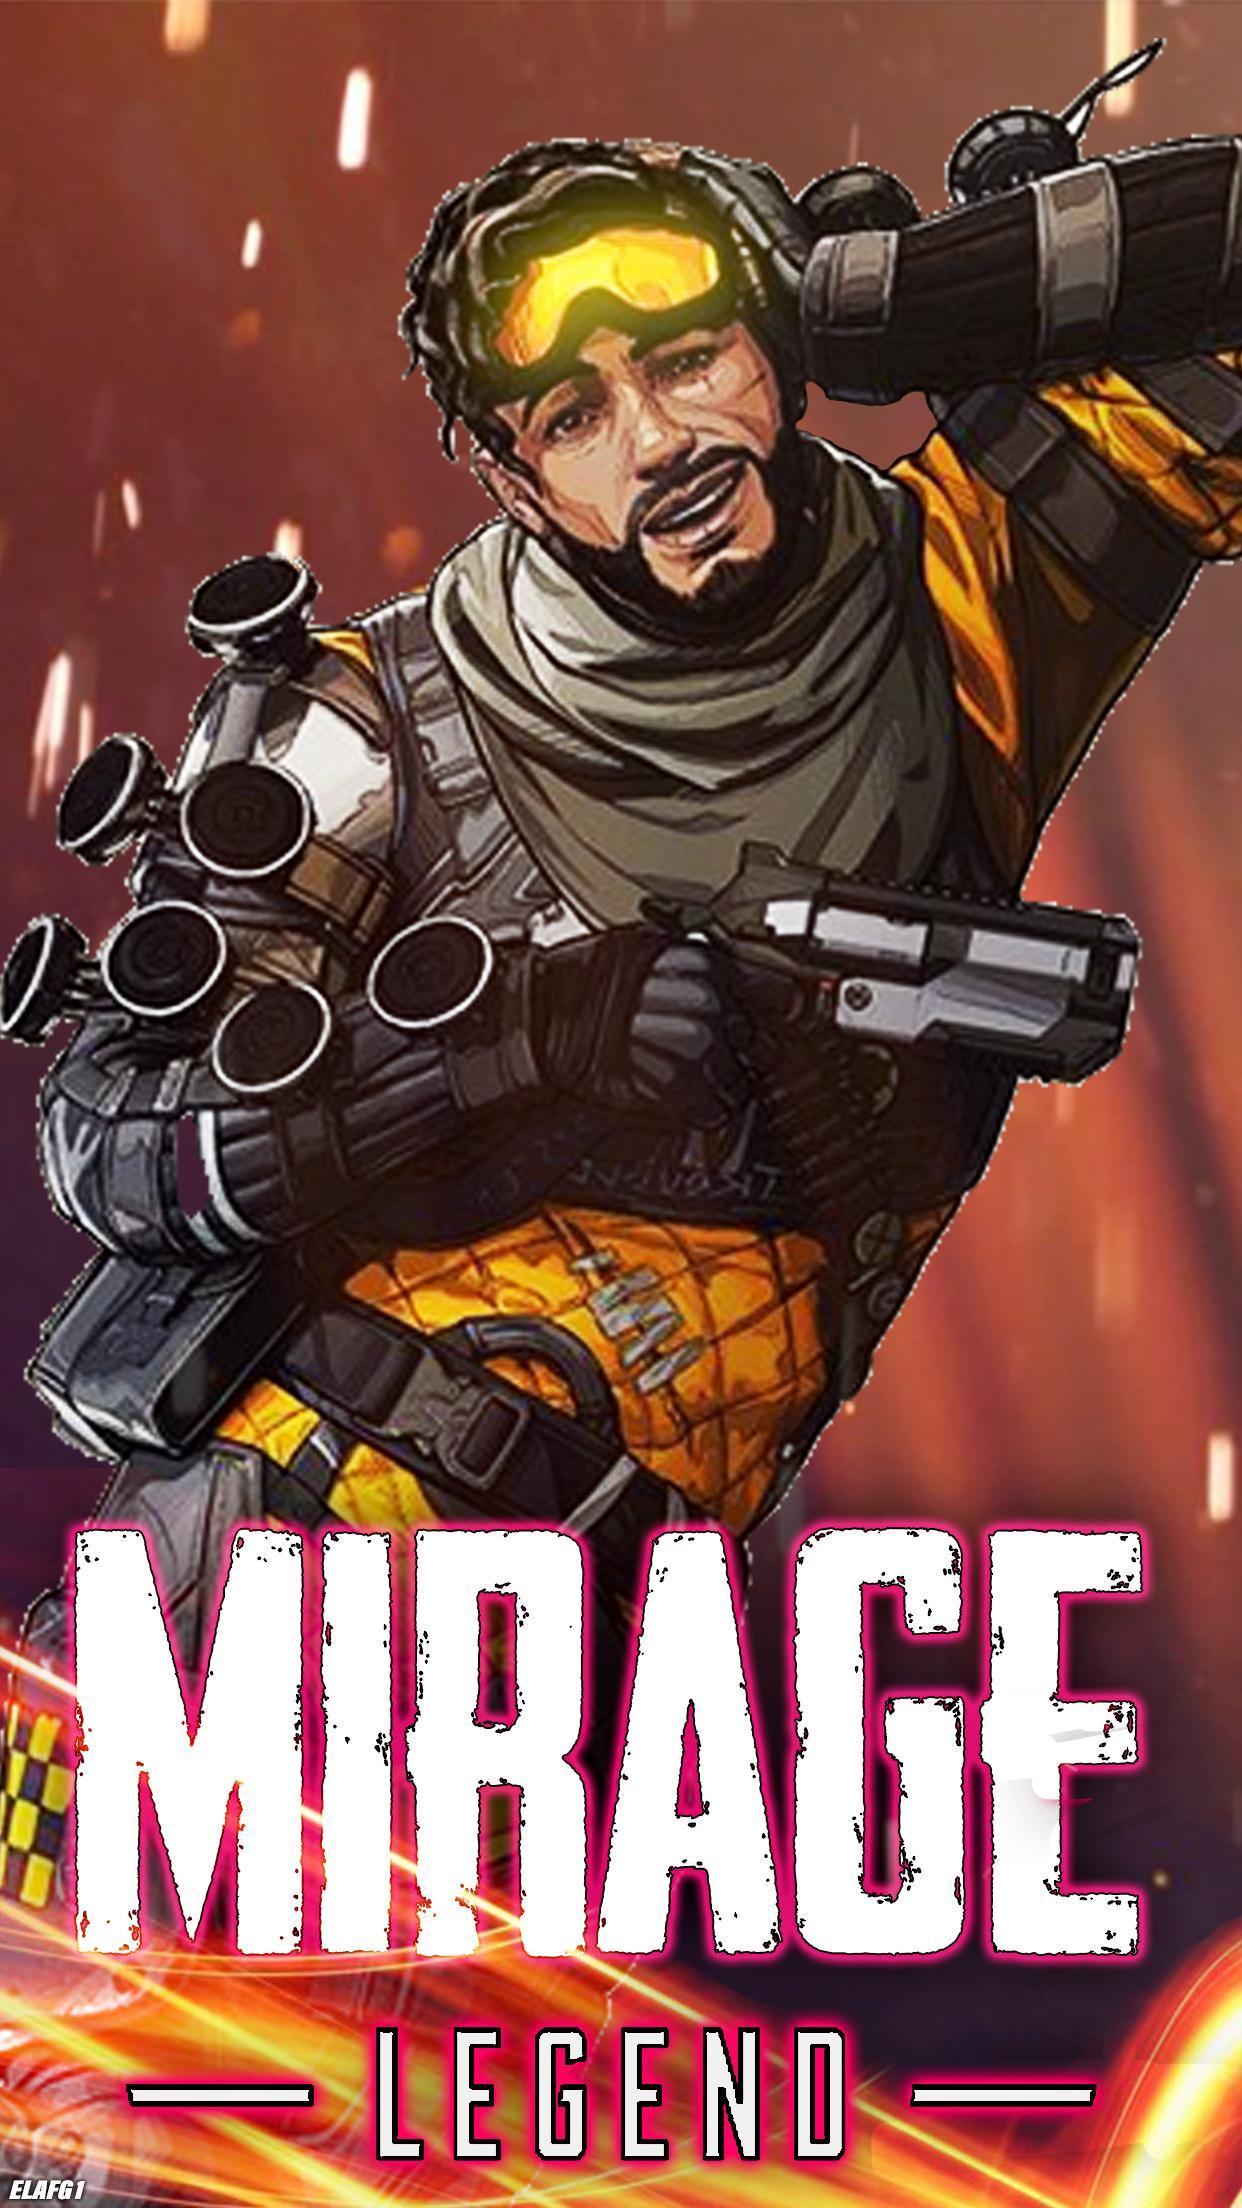 Mirage wallpaper, hope you guys like it